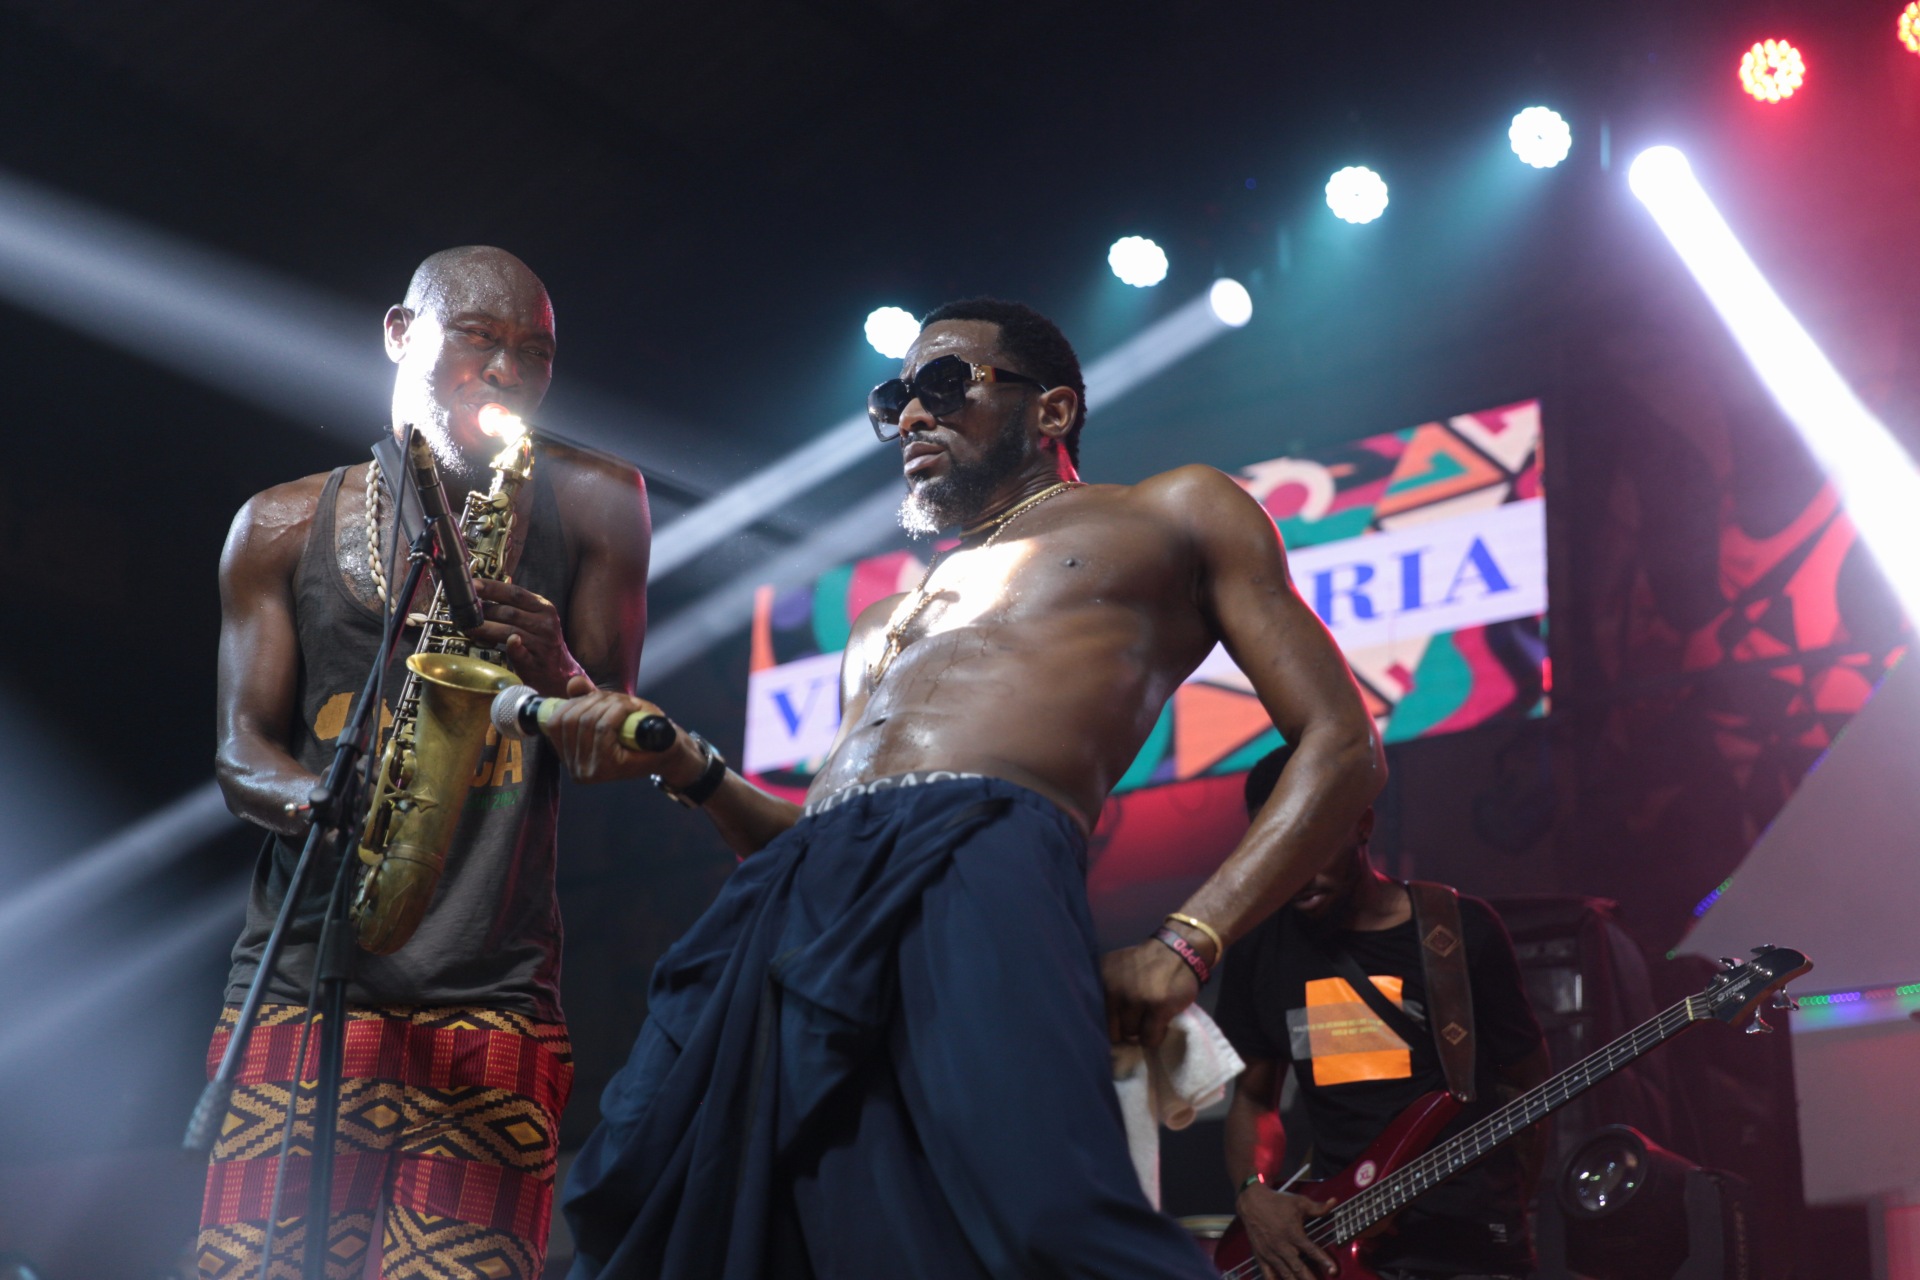 Seun Kuti and D'banj performing at the Grand Finale of Felabration 2021 at the New Afrika Shrine, Lagos. Photo by Ayodele Efunla